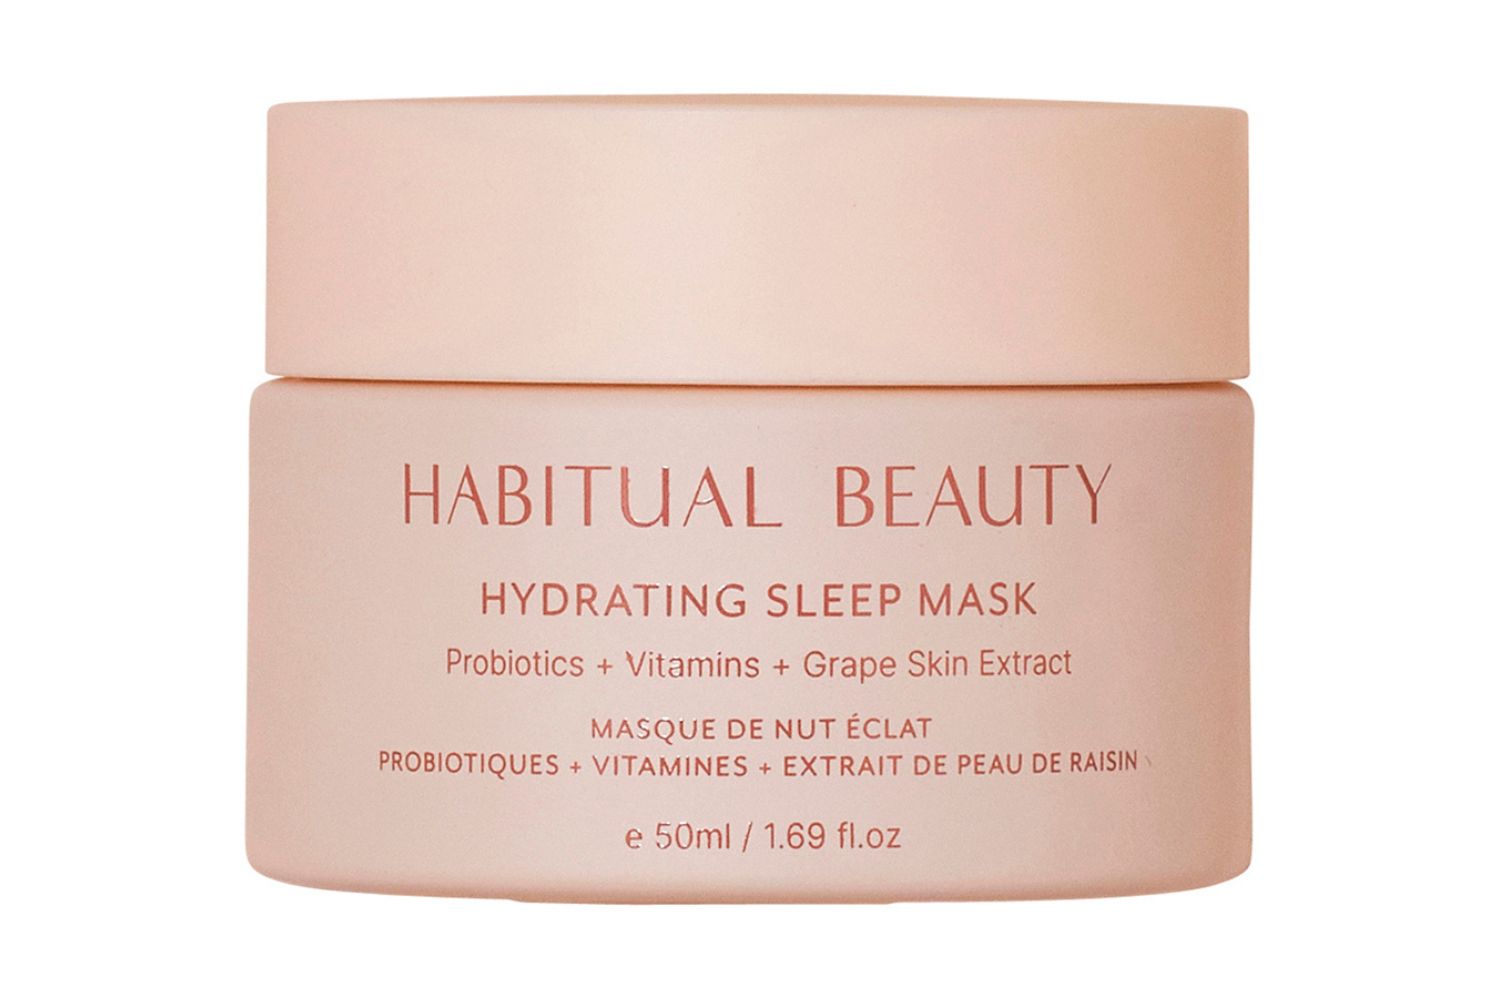 Habitual Beauty Hydrating Sleep Mask, $95 at Sephora